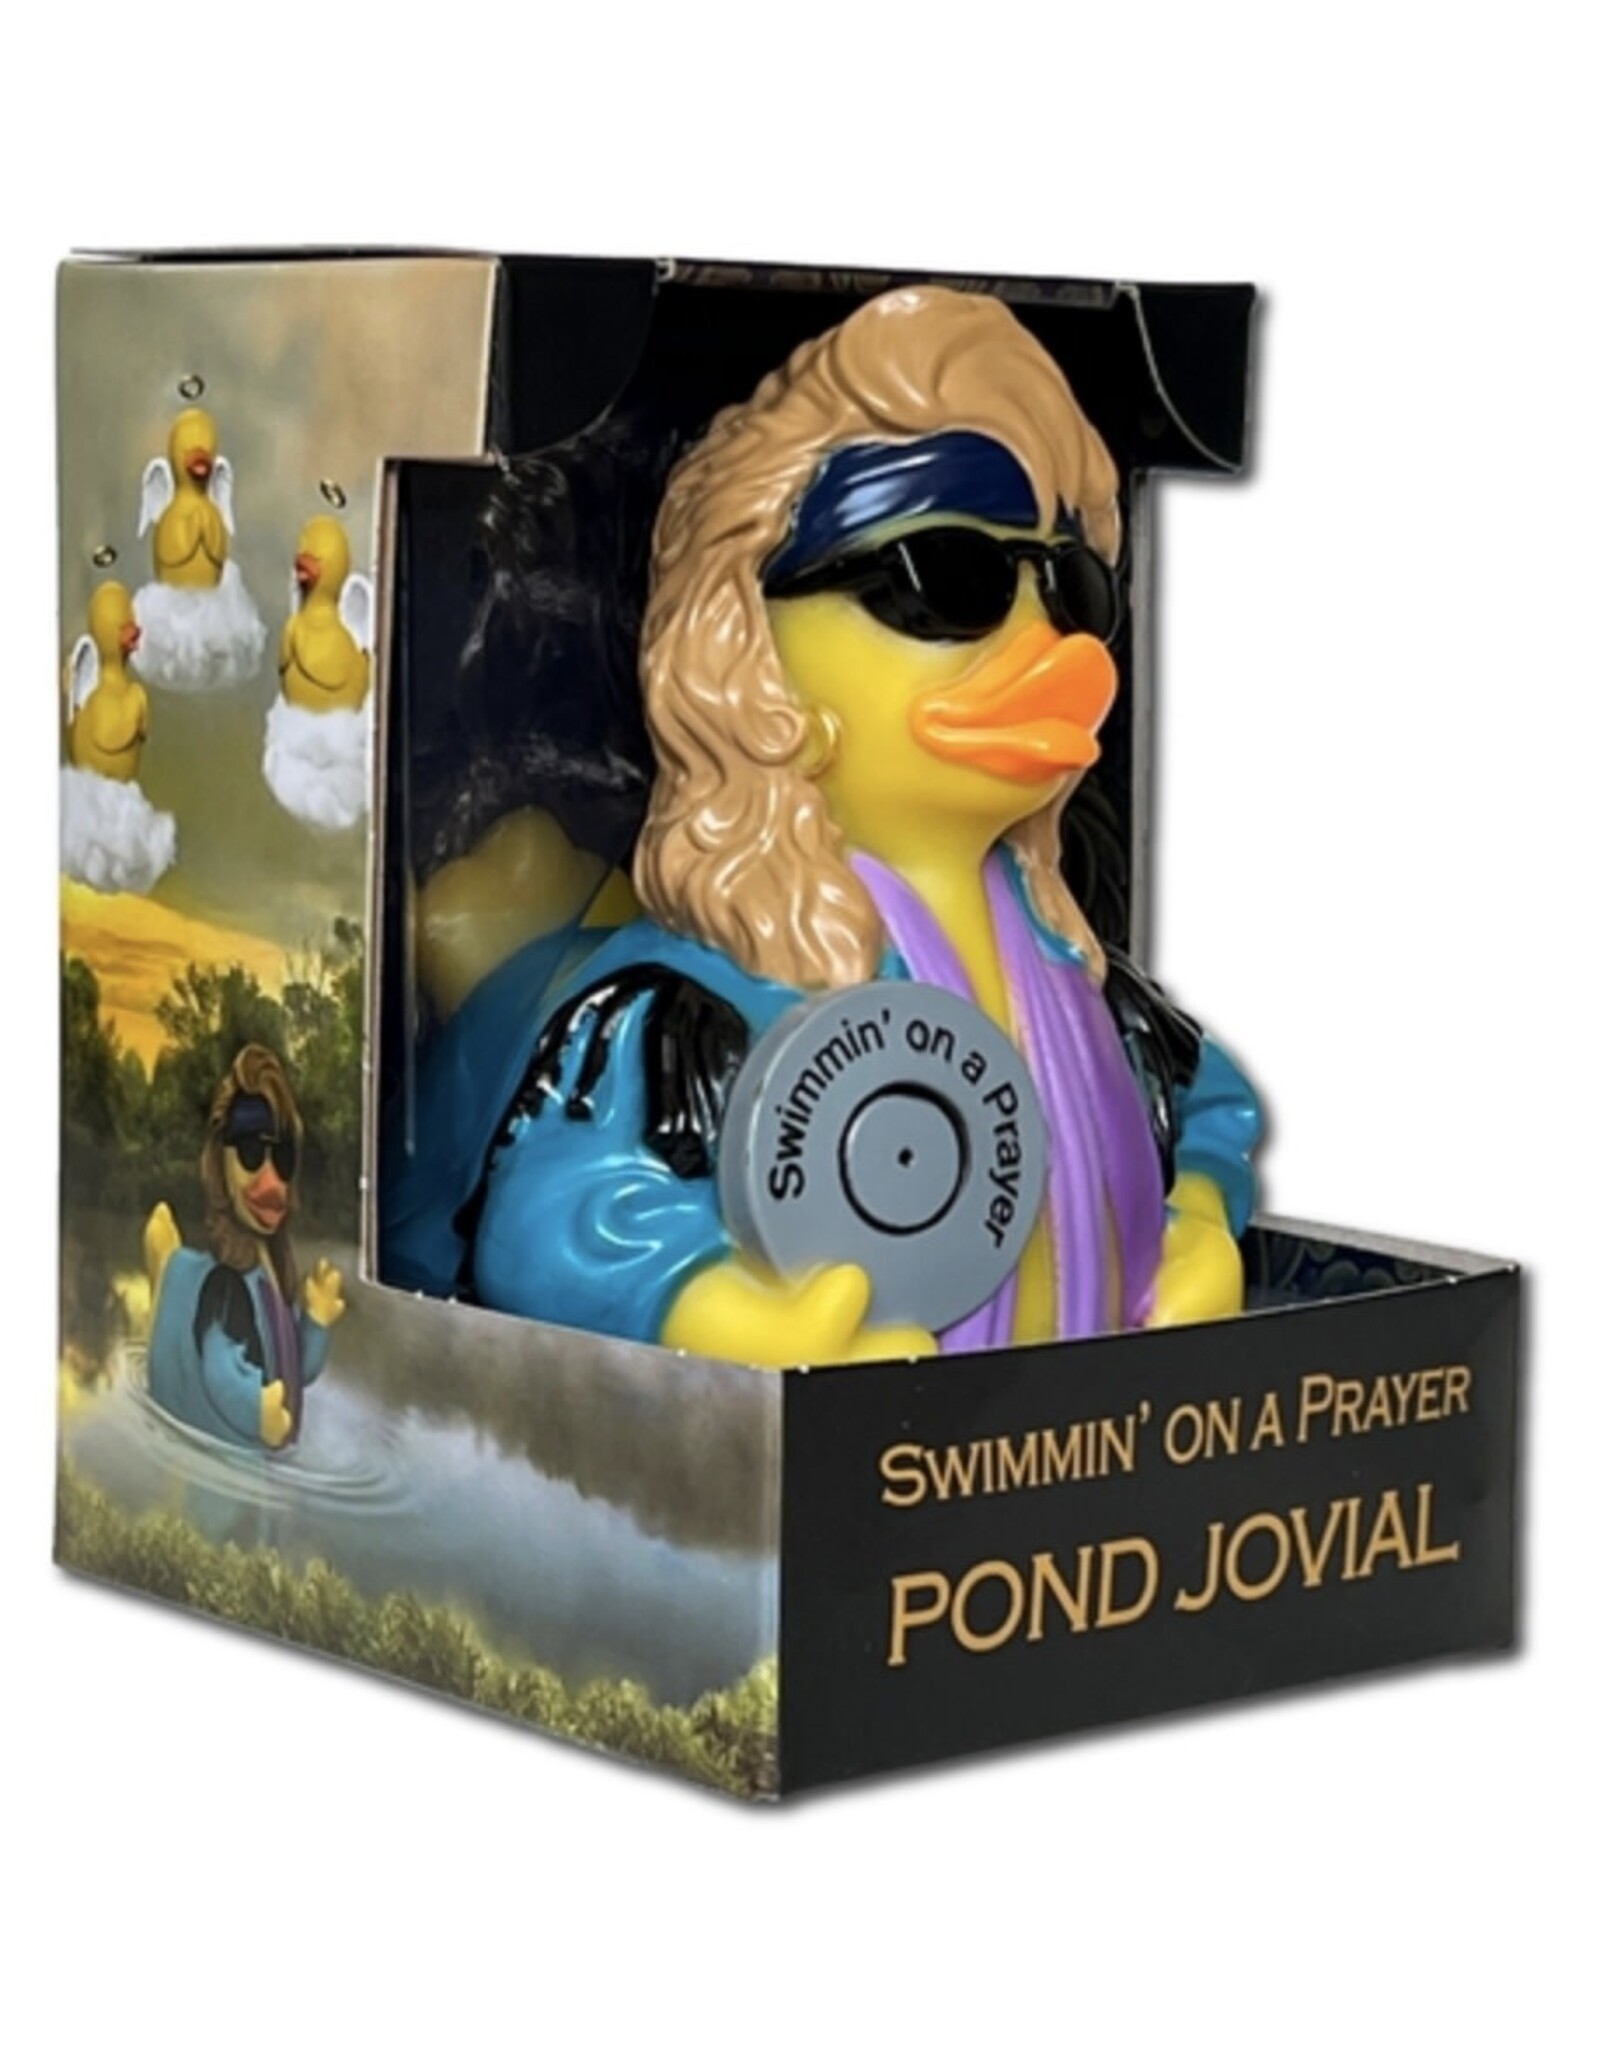 Canard Pond Jovial - "Swimmin on a Prayer"